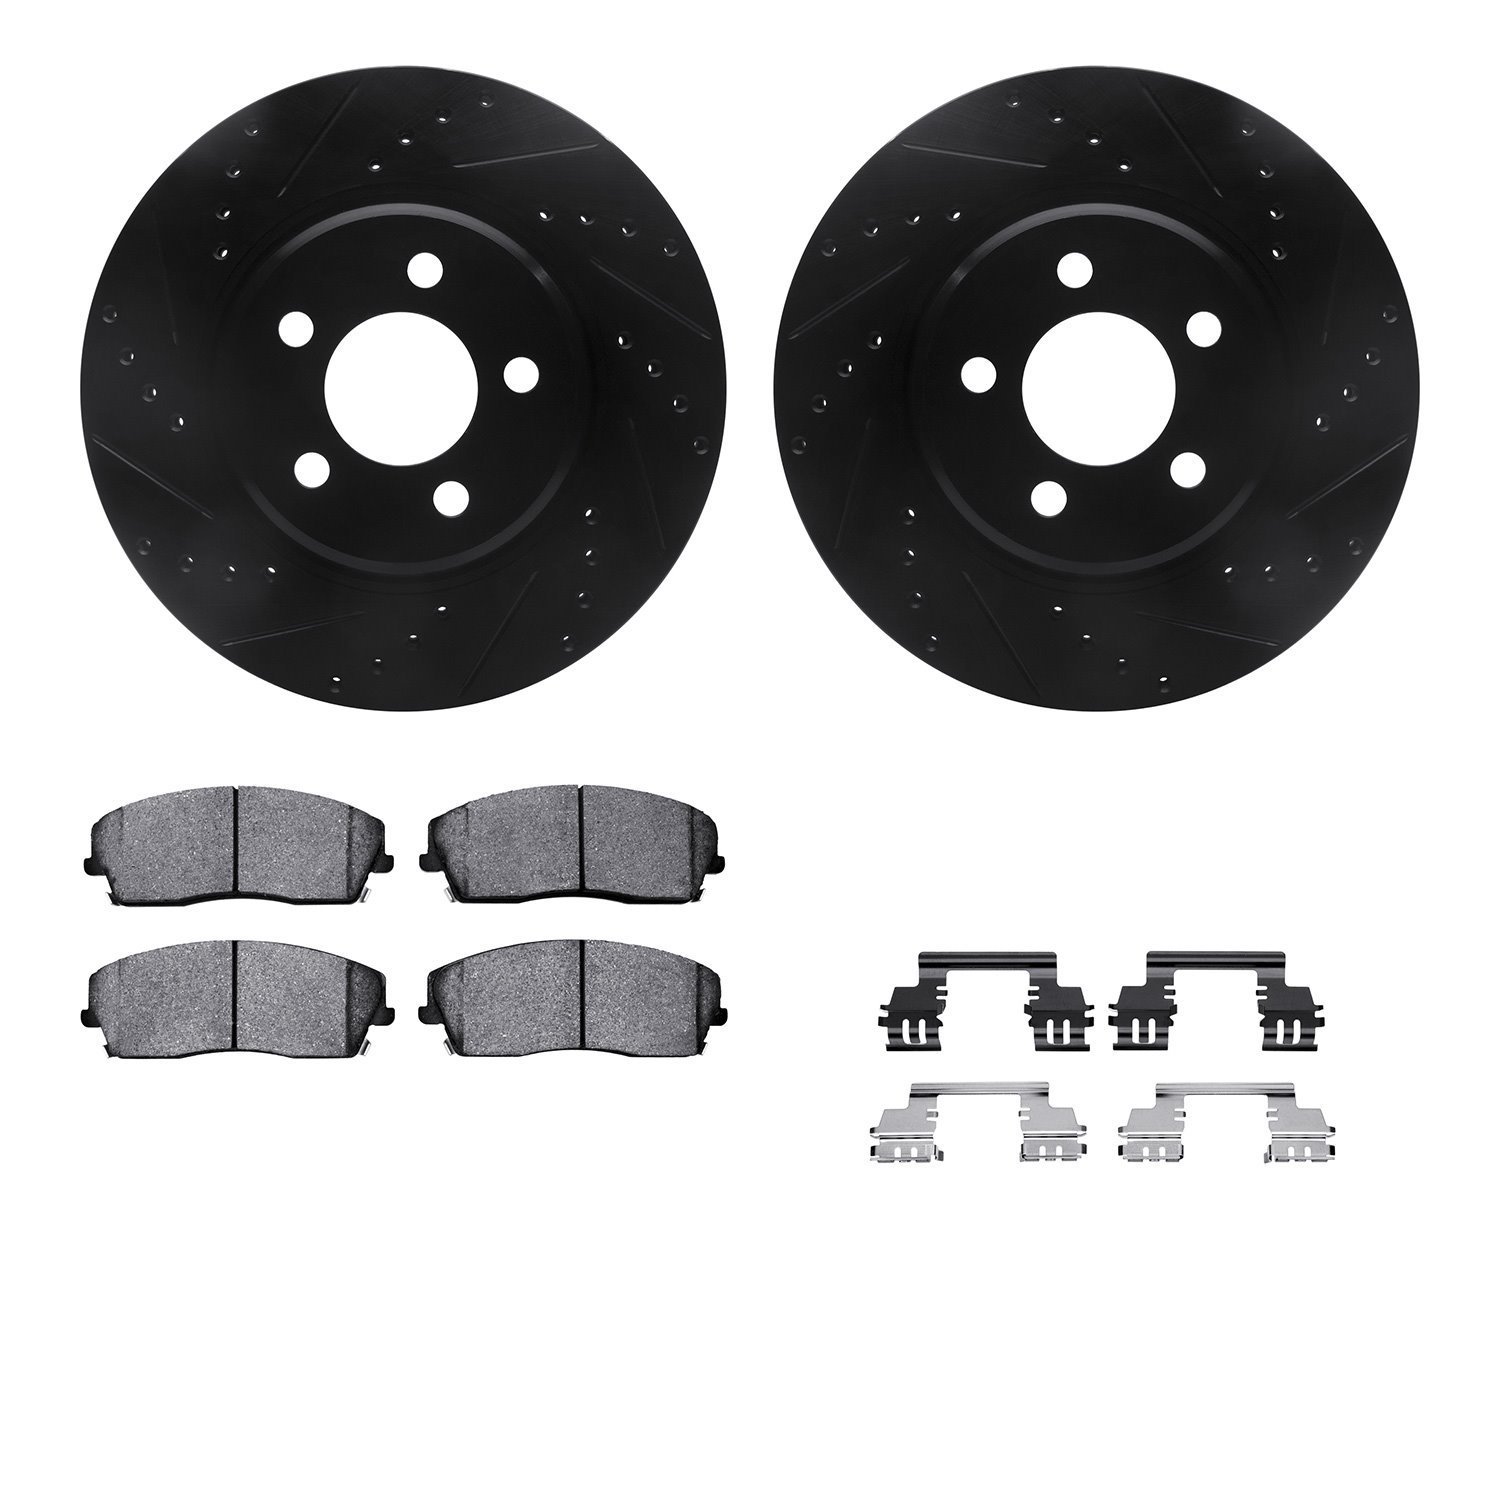 8312-39033 Drilled/Slotted Brake Rotors with 3000-Series Ceramic Brake Pads Kit & Hardware [Black], Fits Select Mopar, Position: